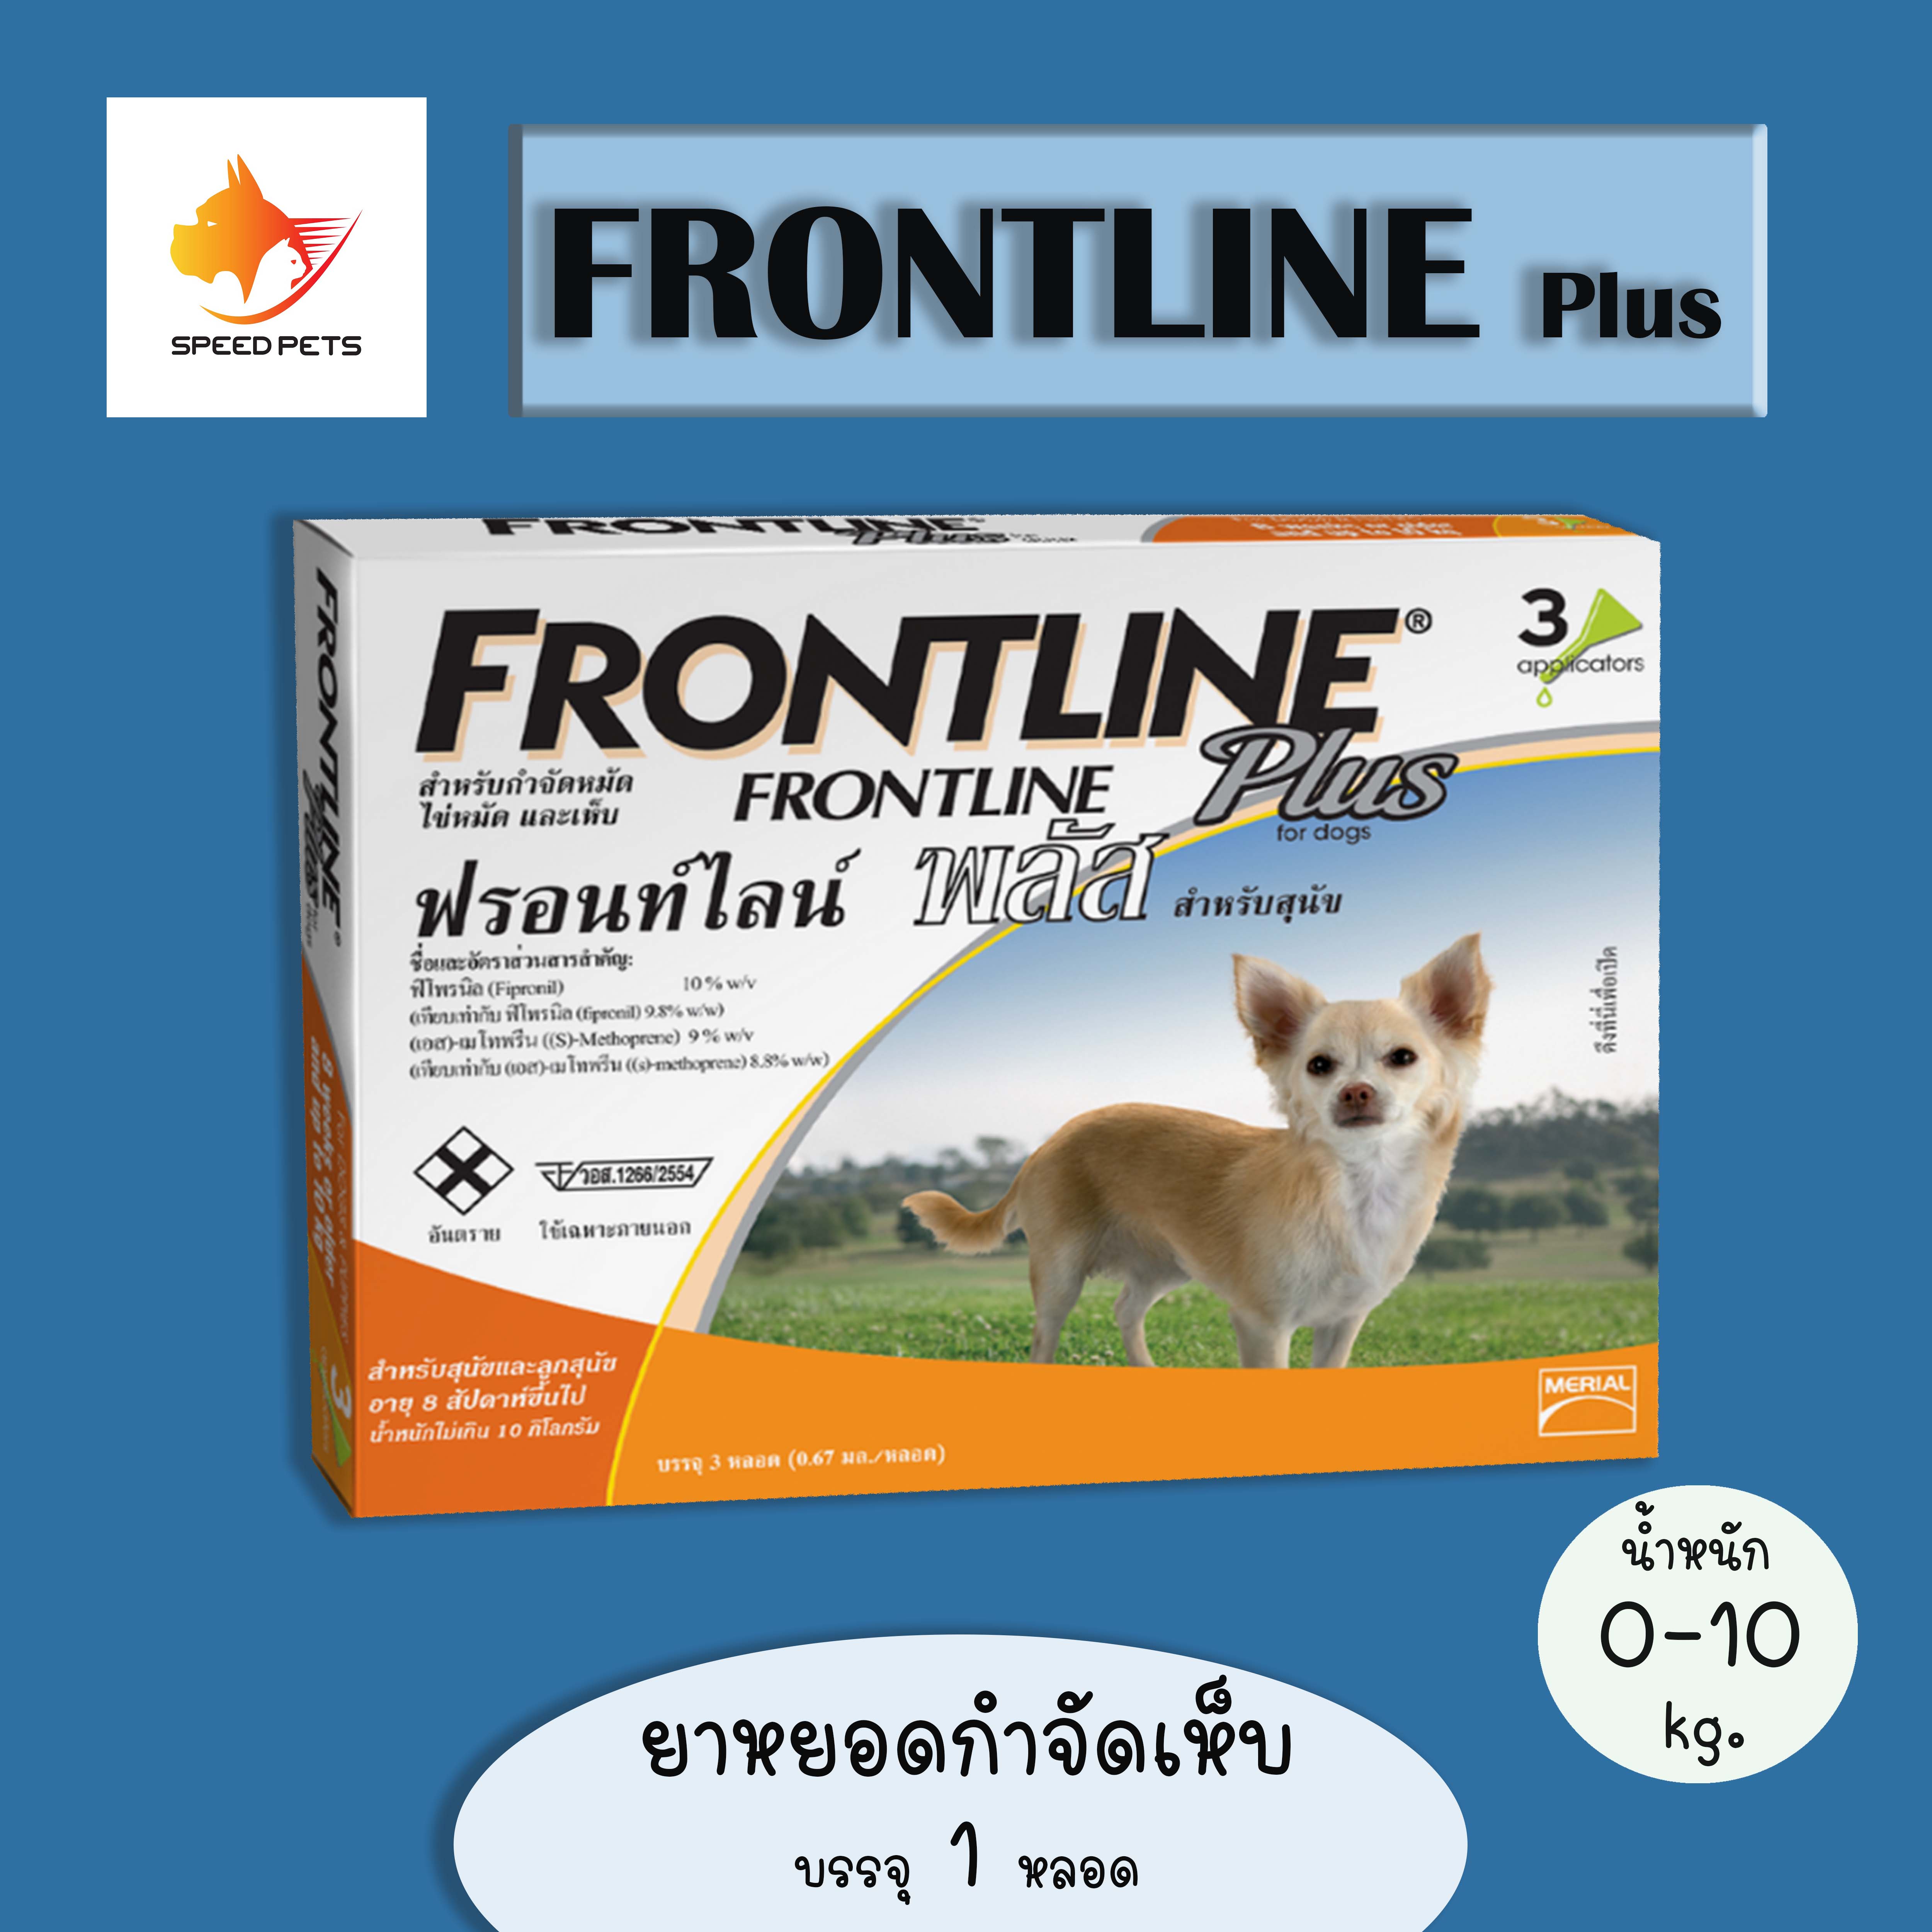 Frontline Plus Dog ฟร้อท์ไลน์ ใช้หยอดกำจัดเห็บ สำหรับหยอดฆ่าเห็บ หยอดหลังคอ ใช้ฆ่าเห็บ กำจัดเห็บ สุนัข น้ำหนักน้อยกว่า 10 Kg X1 หลอด